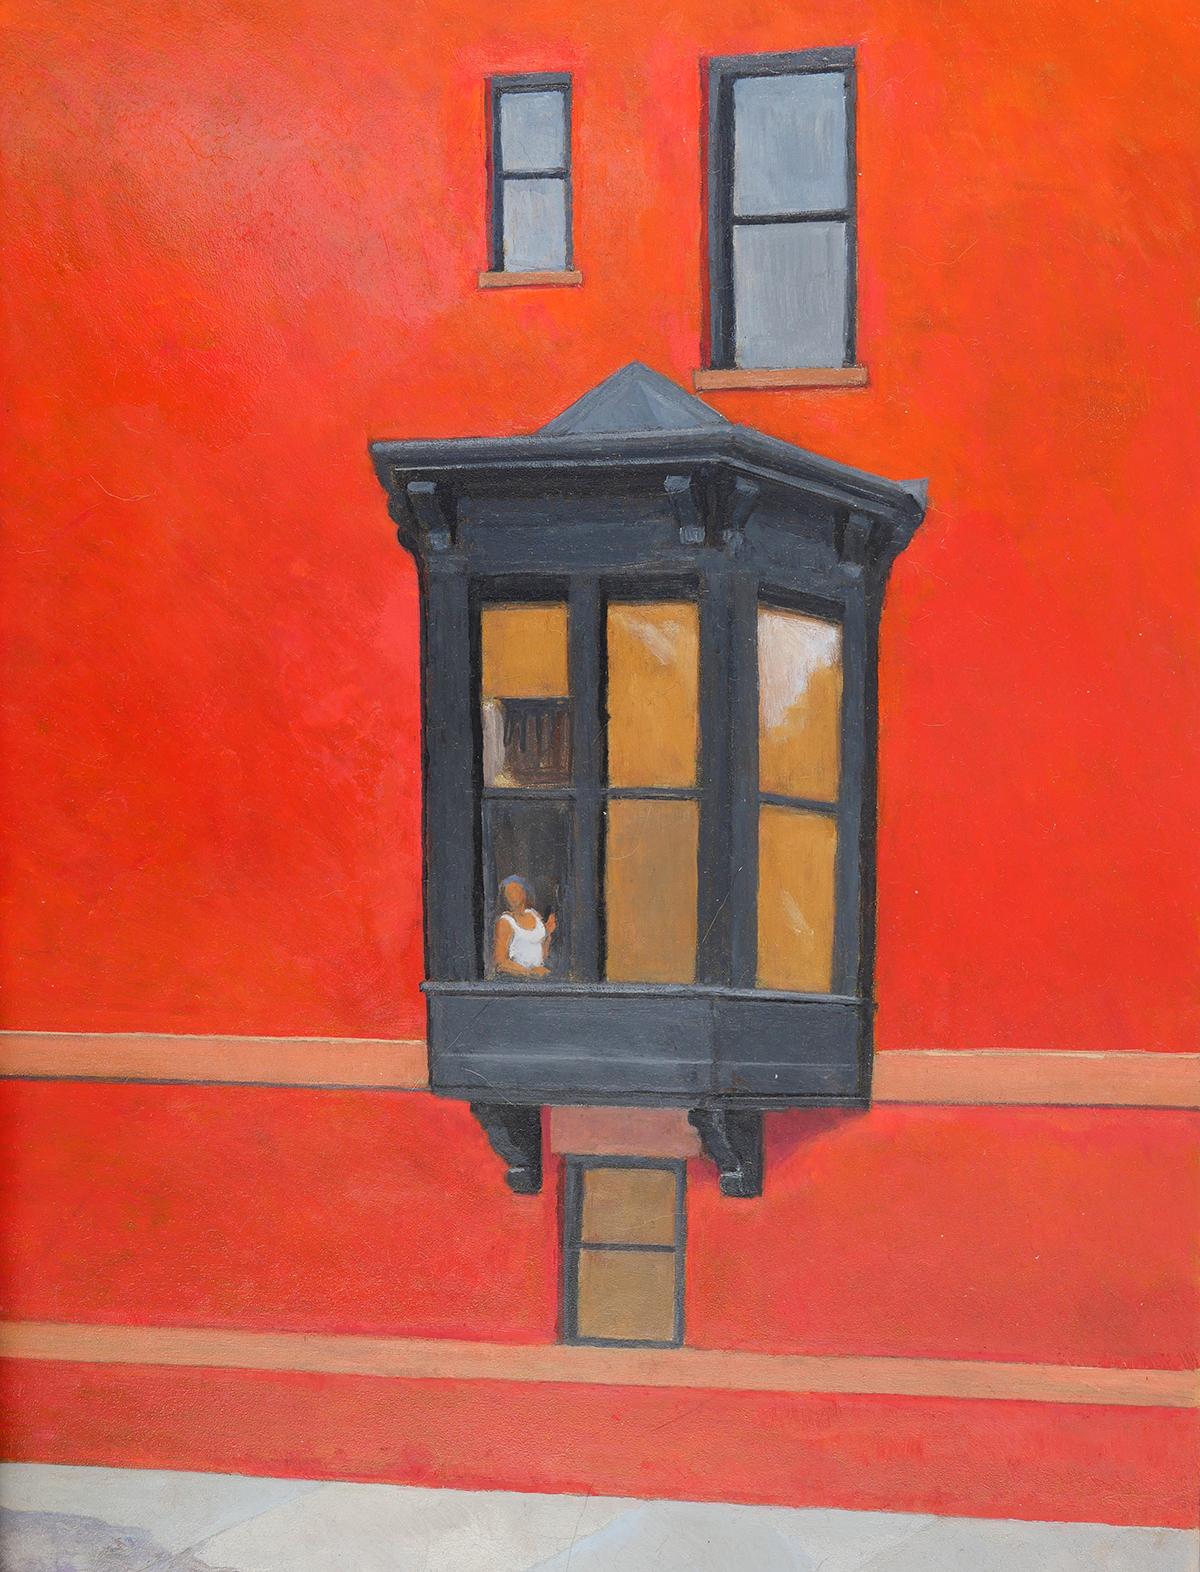 Gregory Frux Landscape Painting - Window Box bay window of red brick Brooklyn building, similar to Edward Hopper 